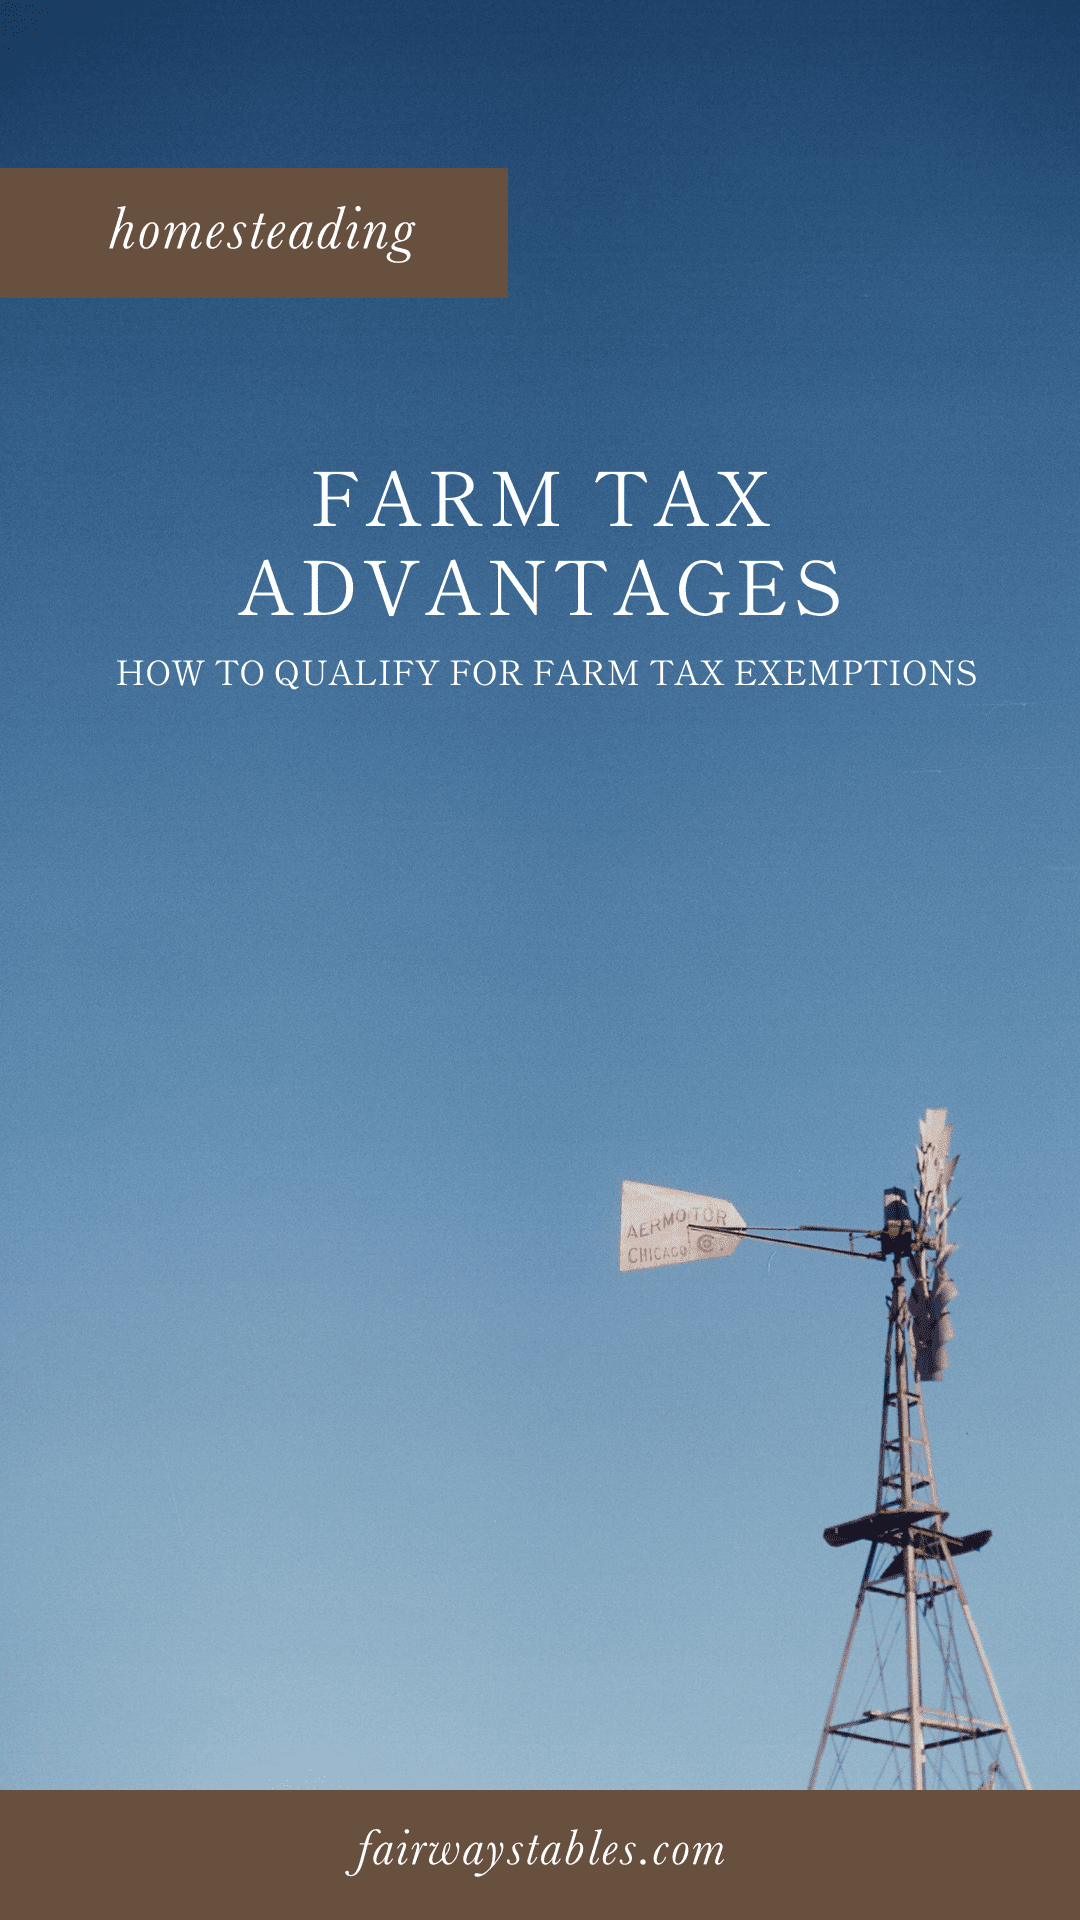 farm tax advantages fairwaystables.com